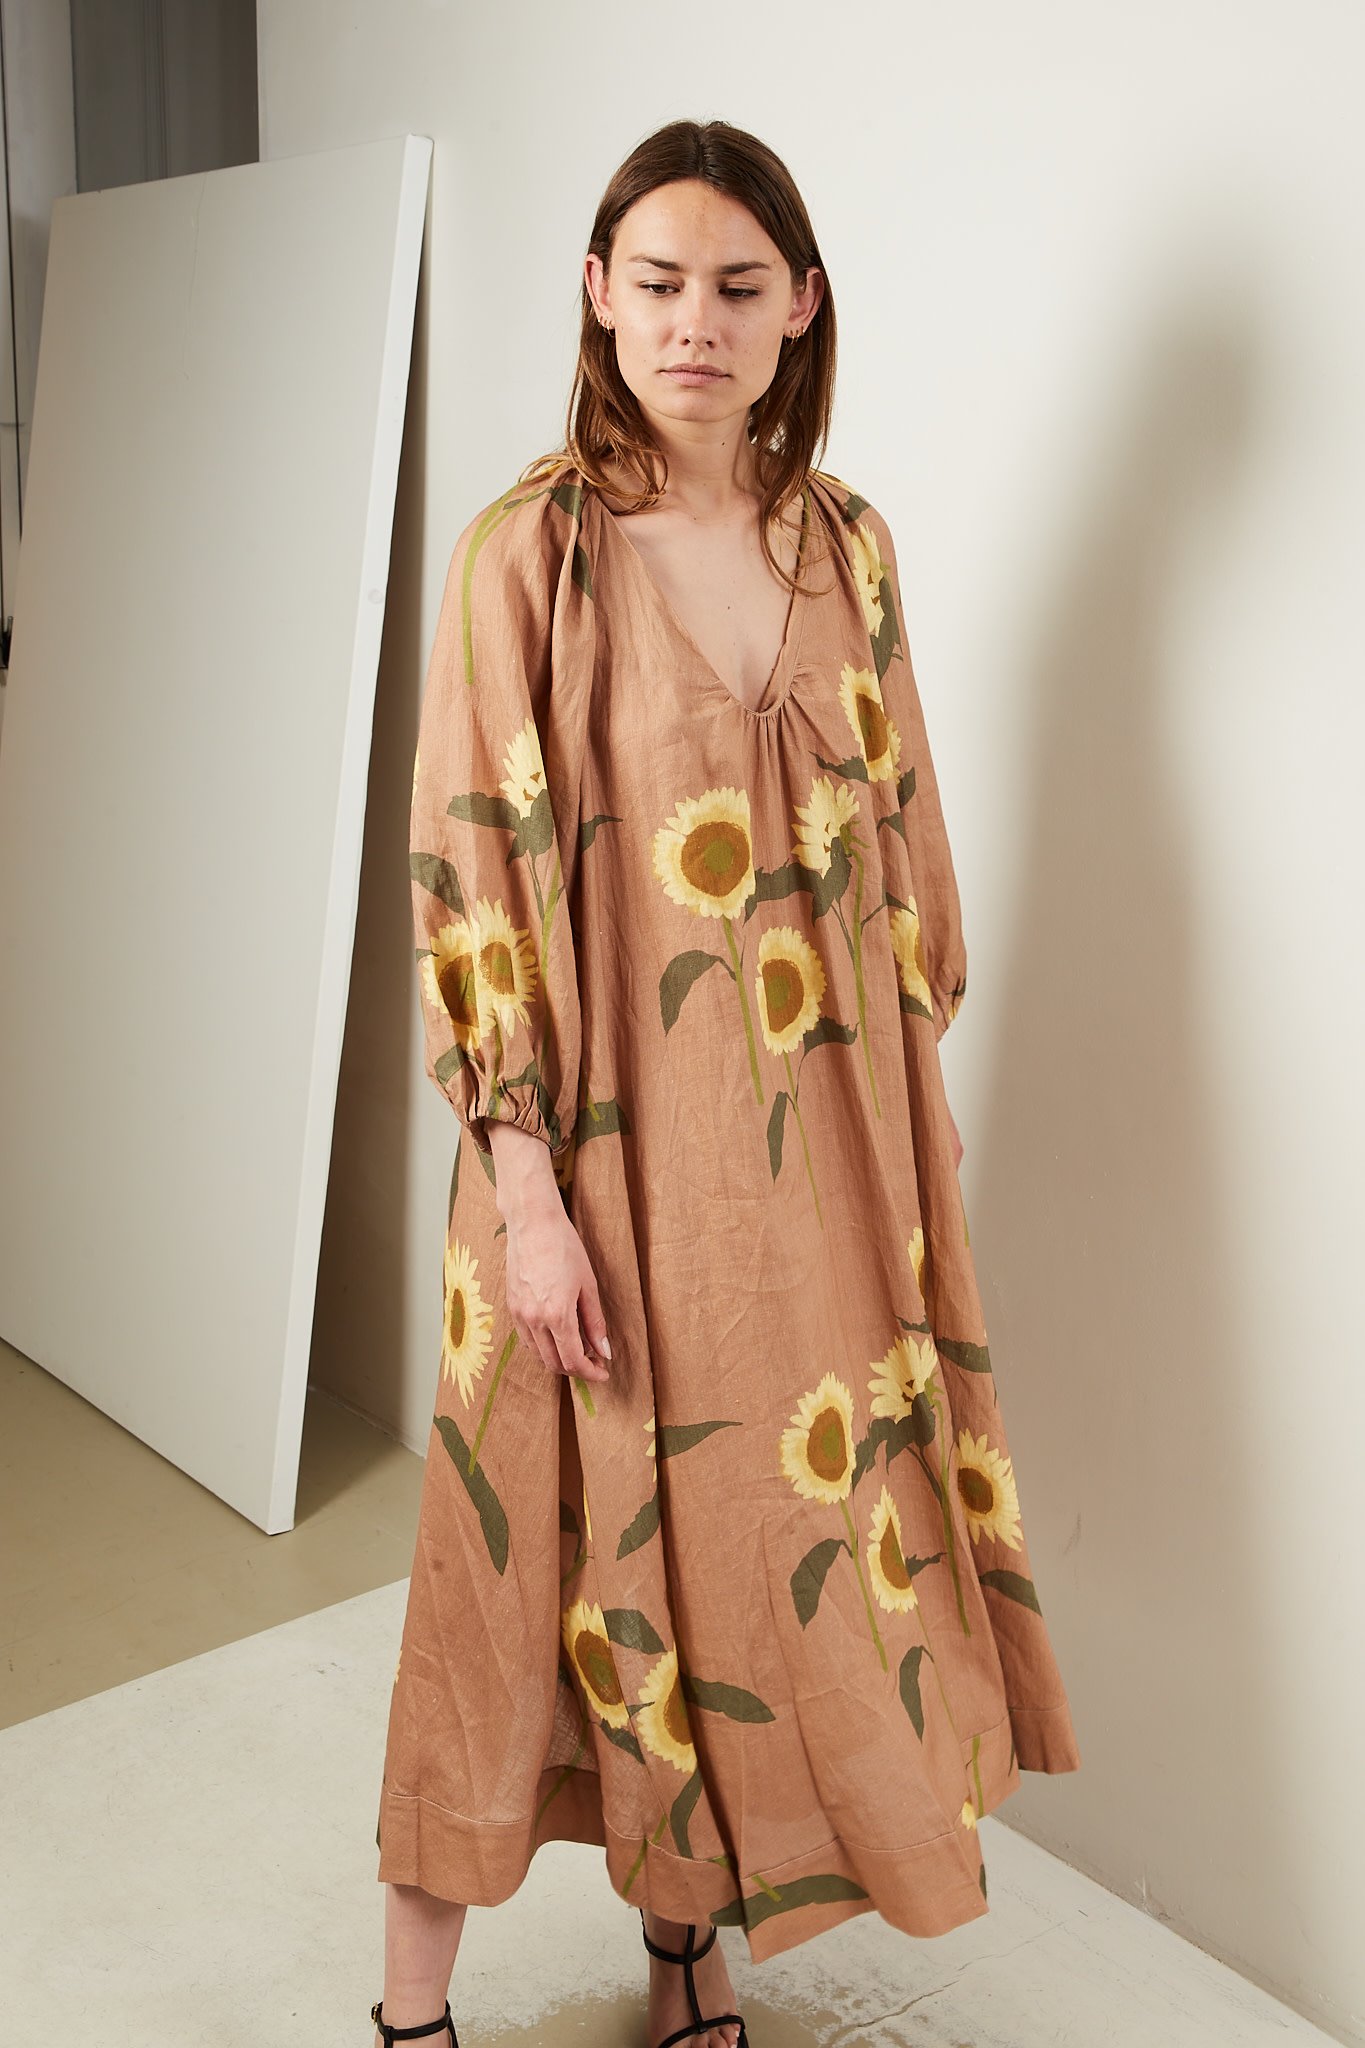 Bernadette Georgette sunflower dress